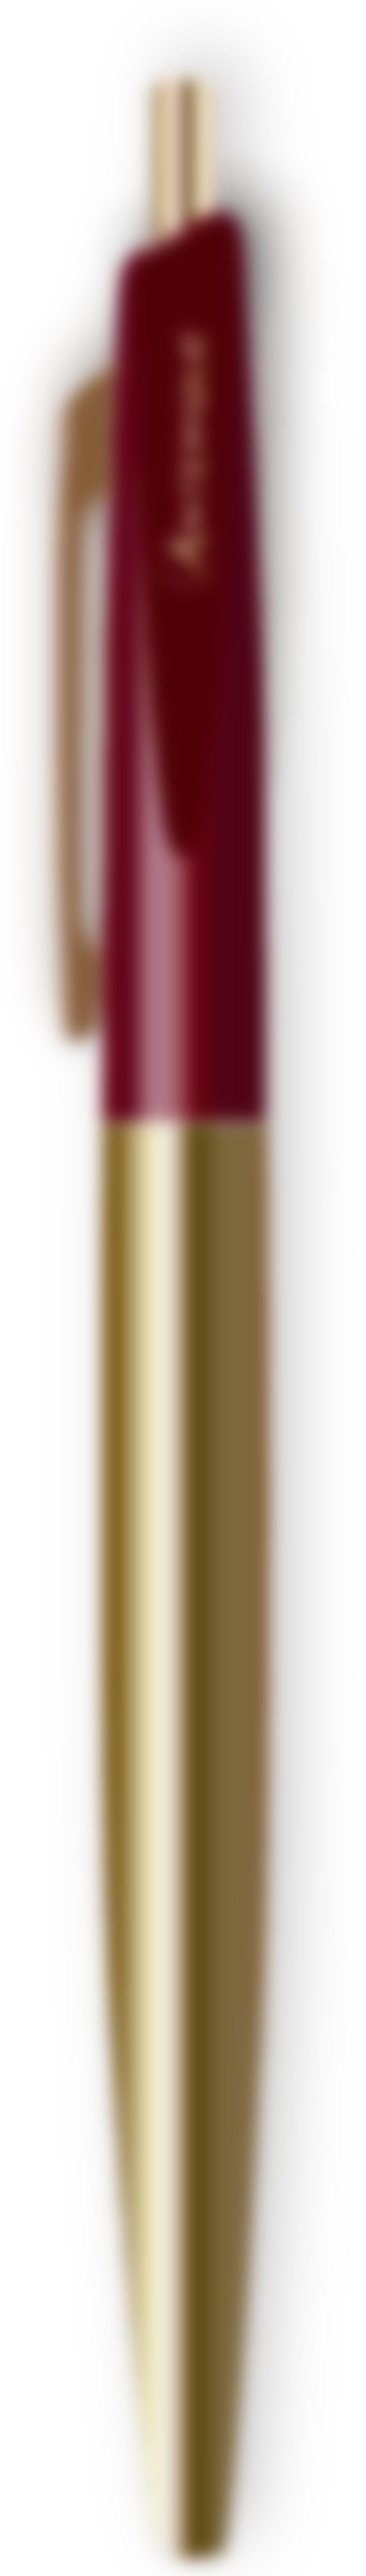 Anterique Bp2 Brass 0.5mm Ballpoint Pen